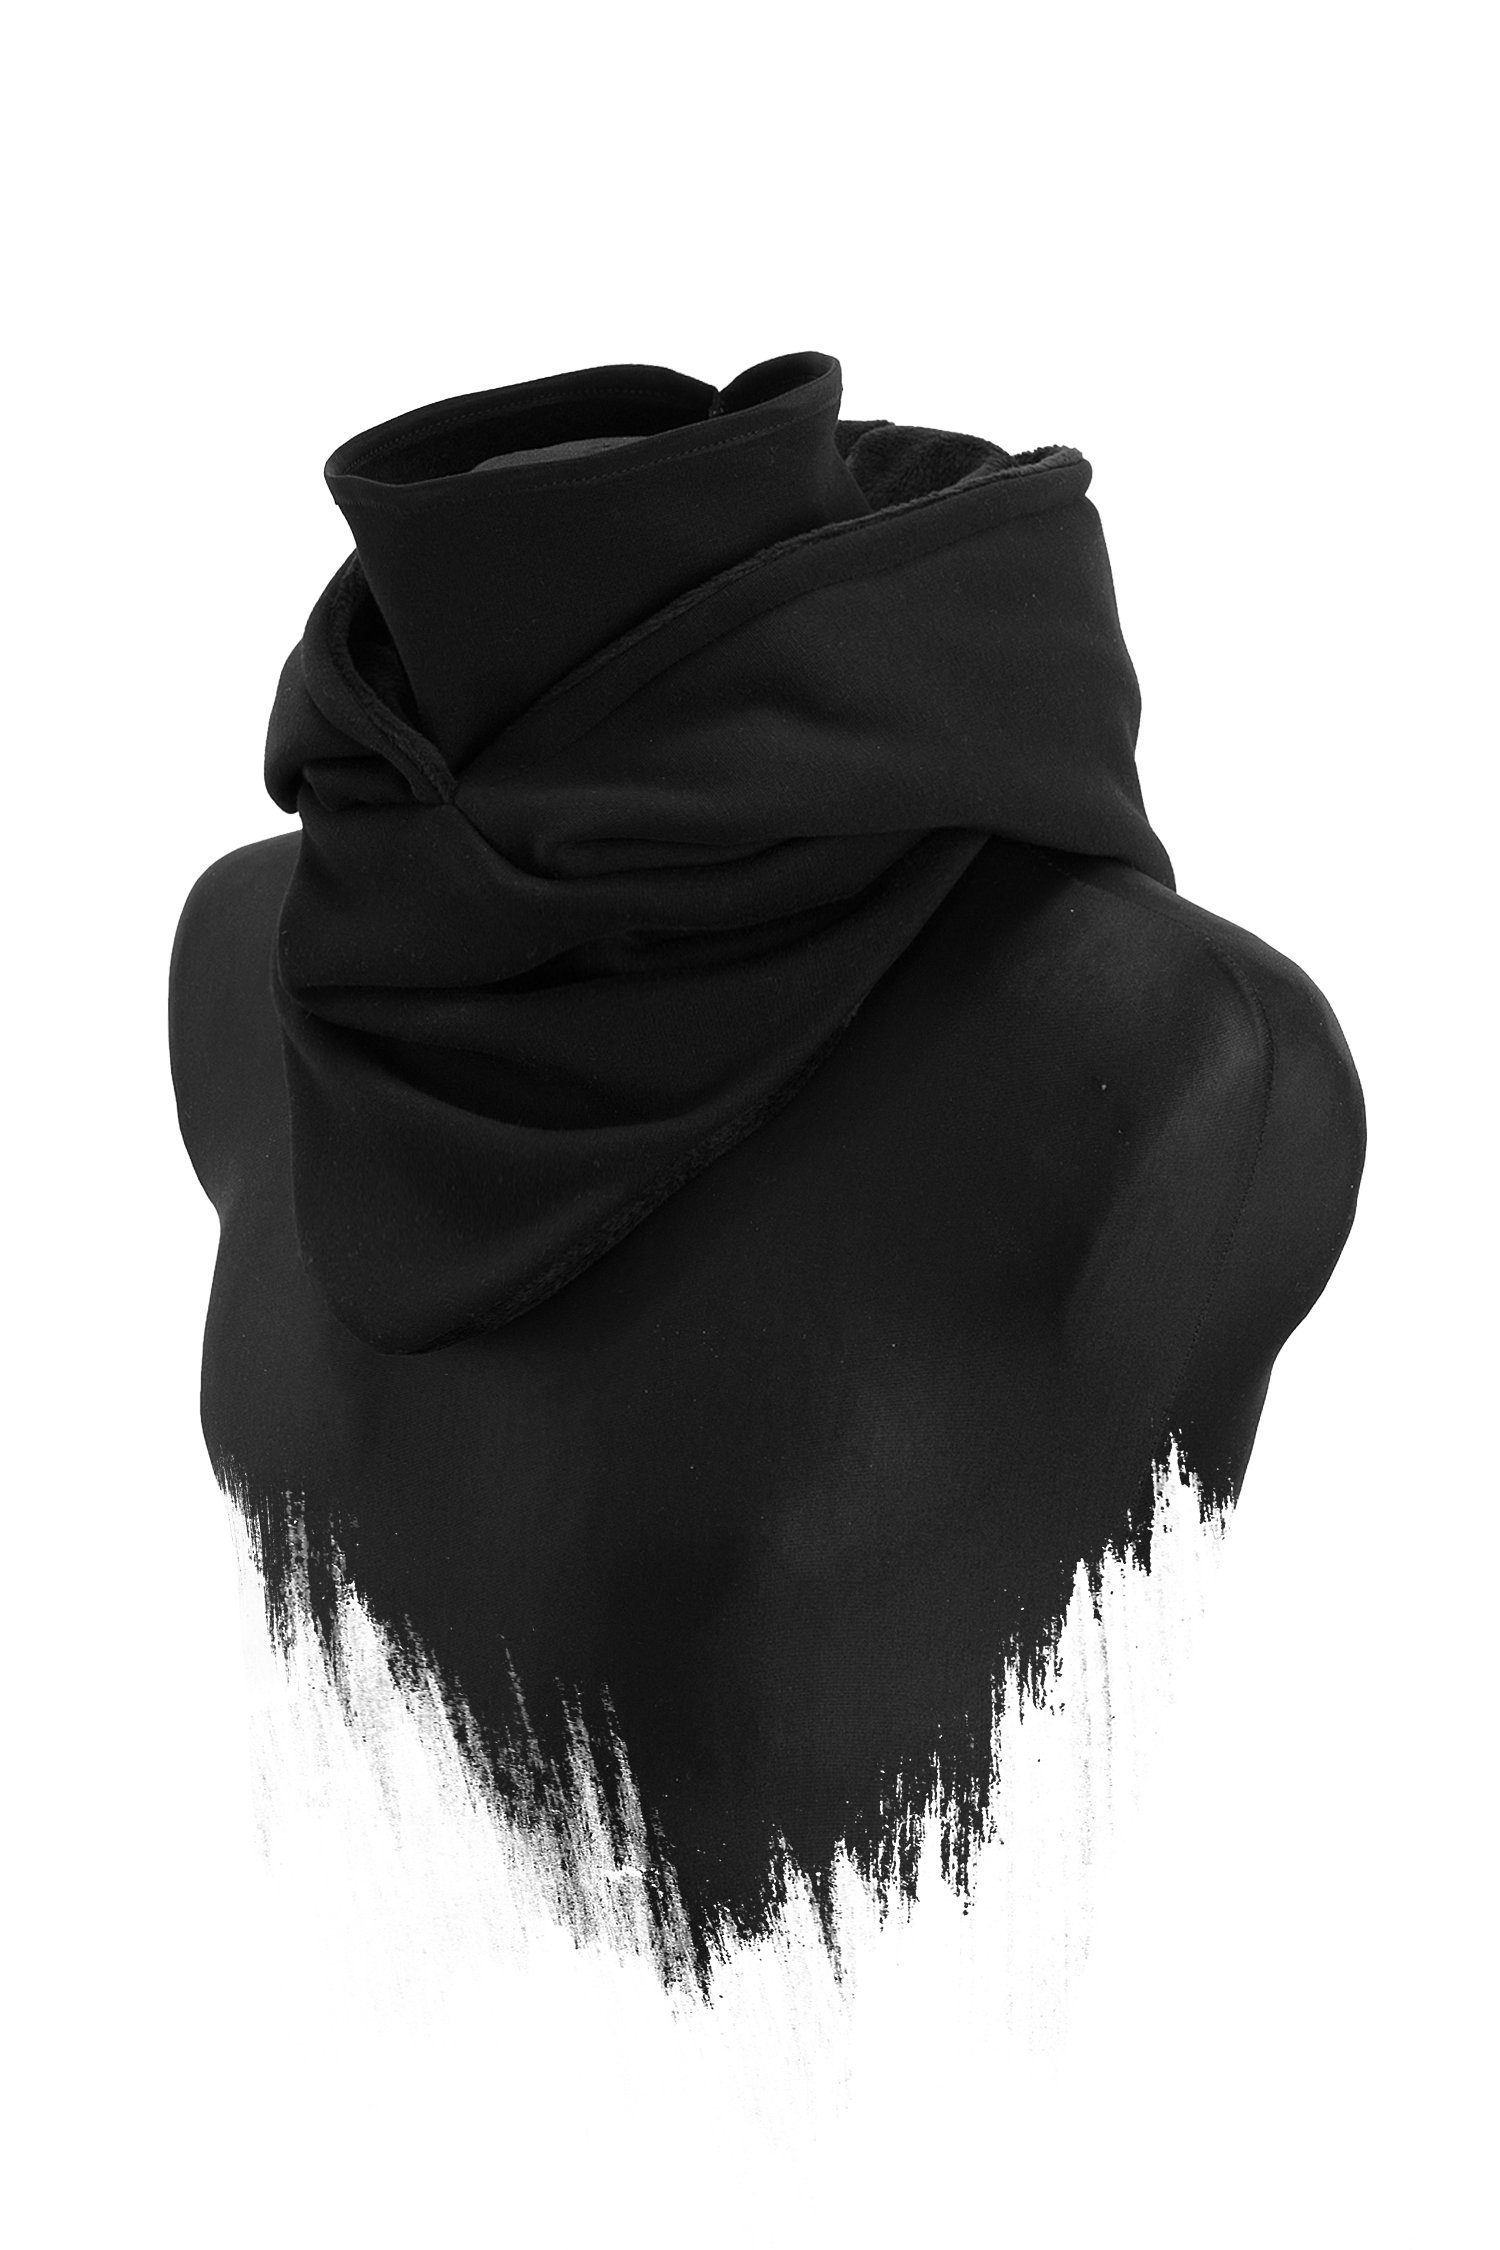 Schal Hooded mit Manufaktur13 Out Kapuzenschal, Black integriertem Alpenfleece, Windbreaker Loop - Schal aus